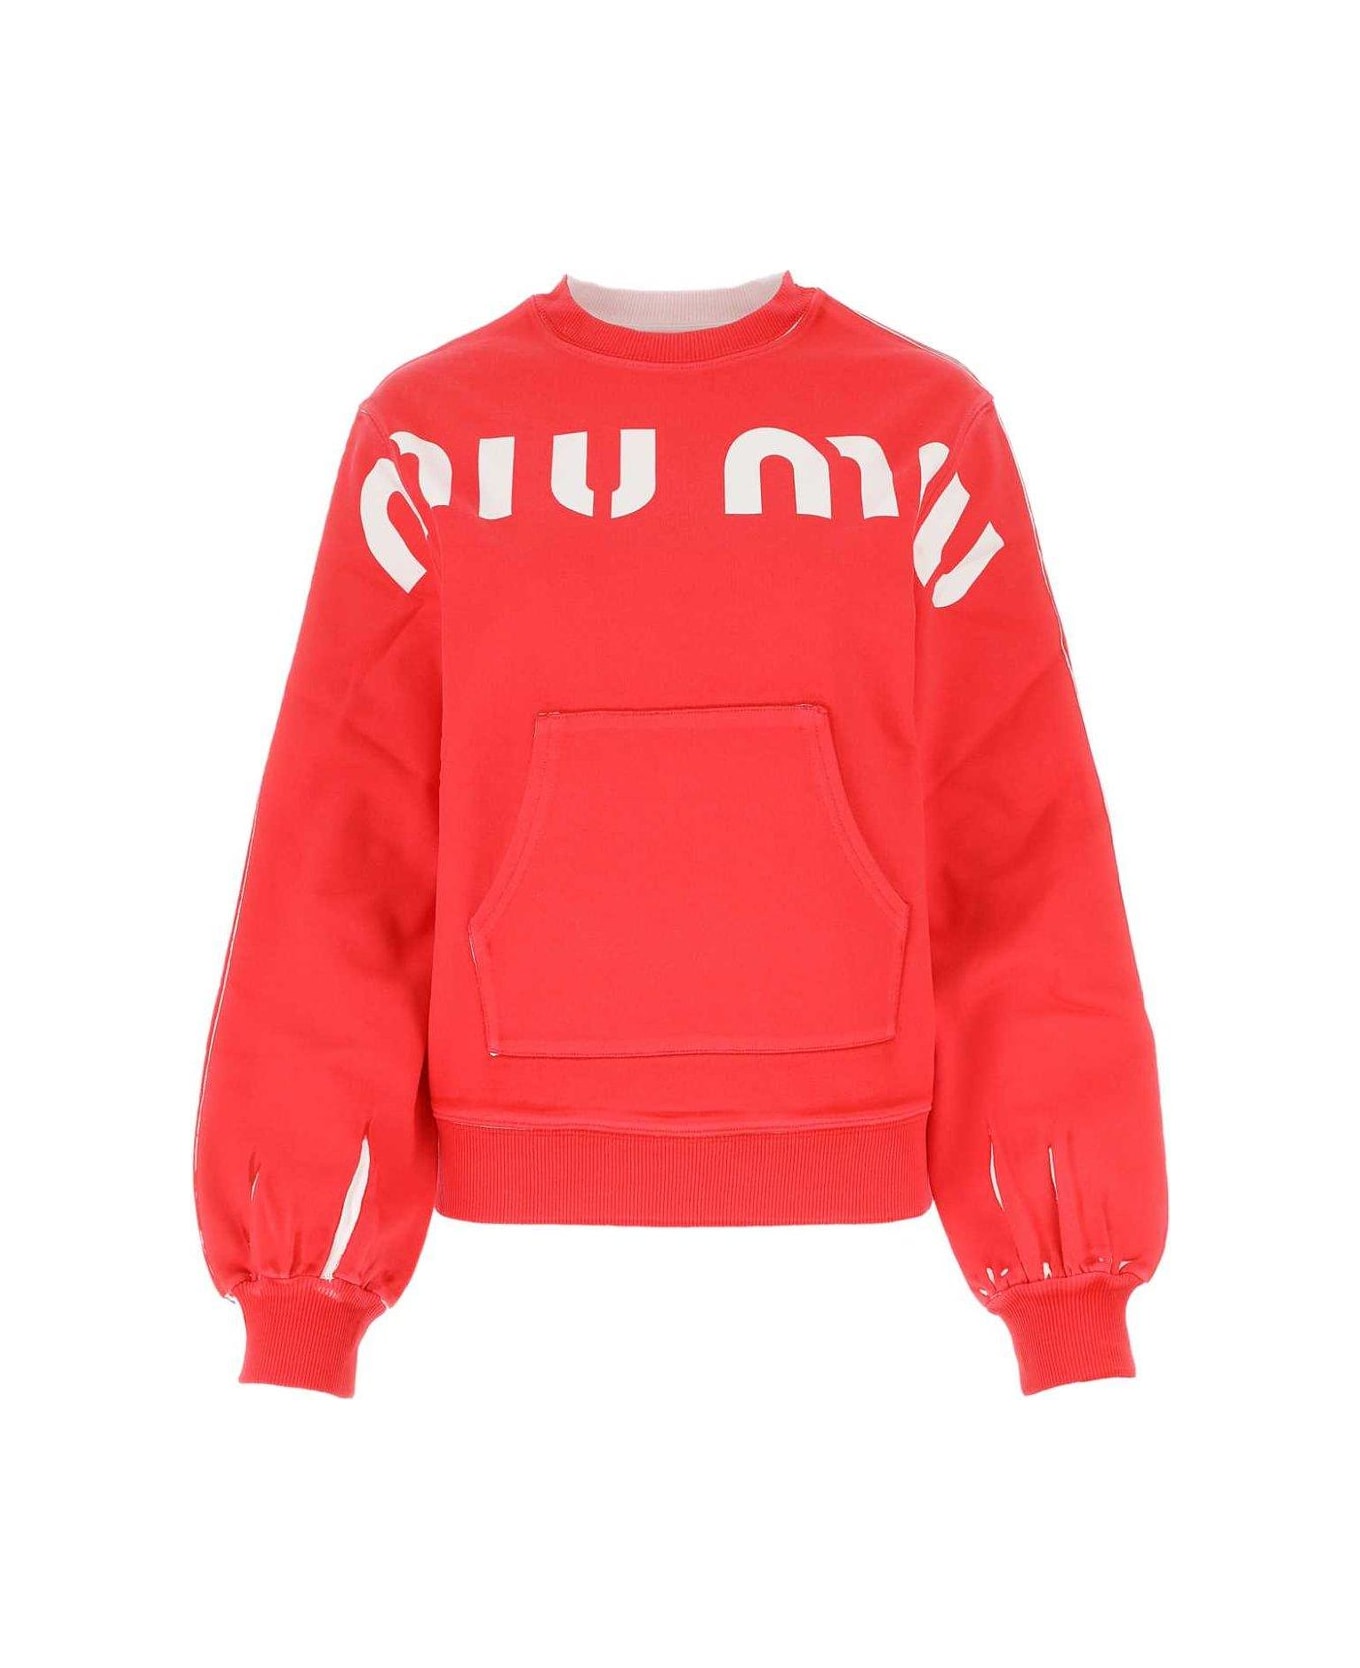 Miu Miu Logo Printed Crewneck Sweatshirt - Red フリース